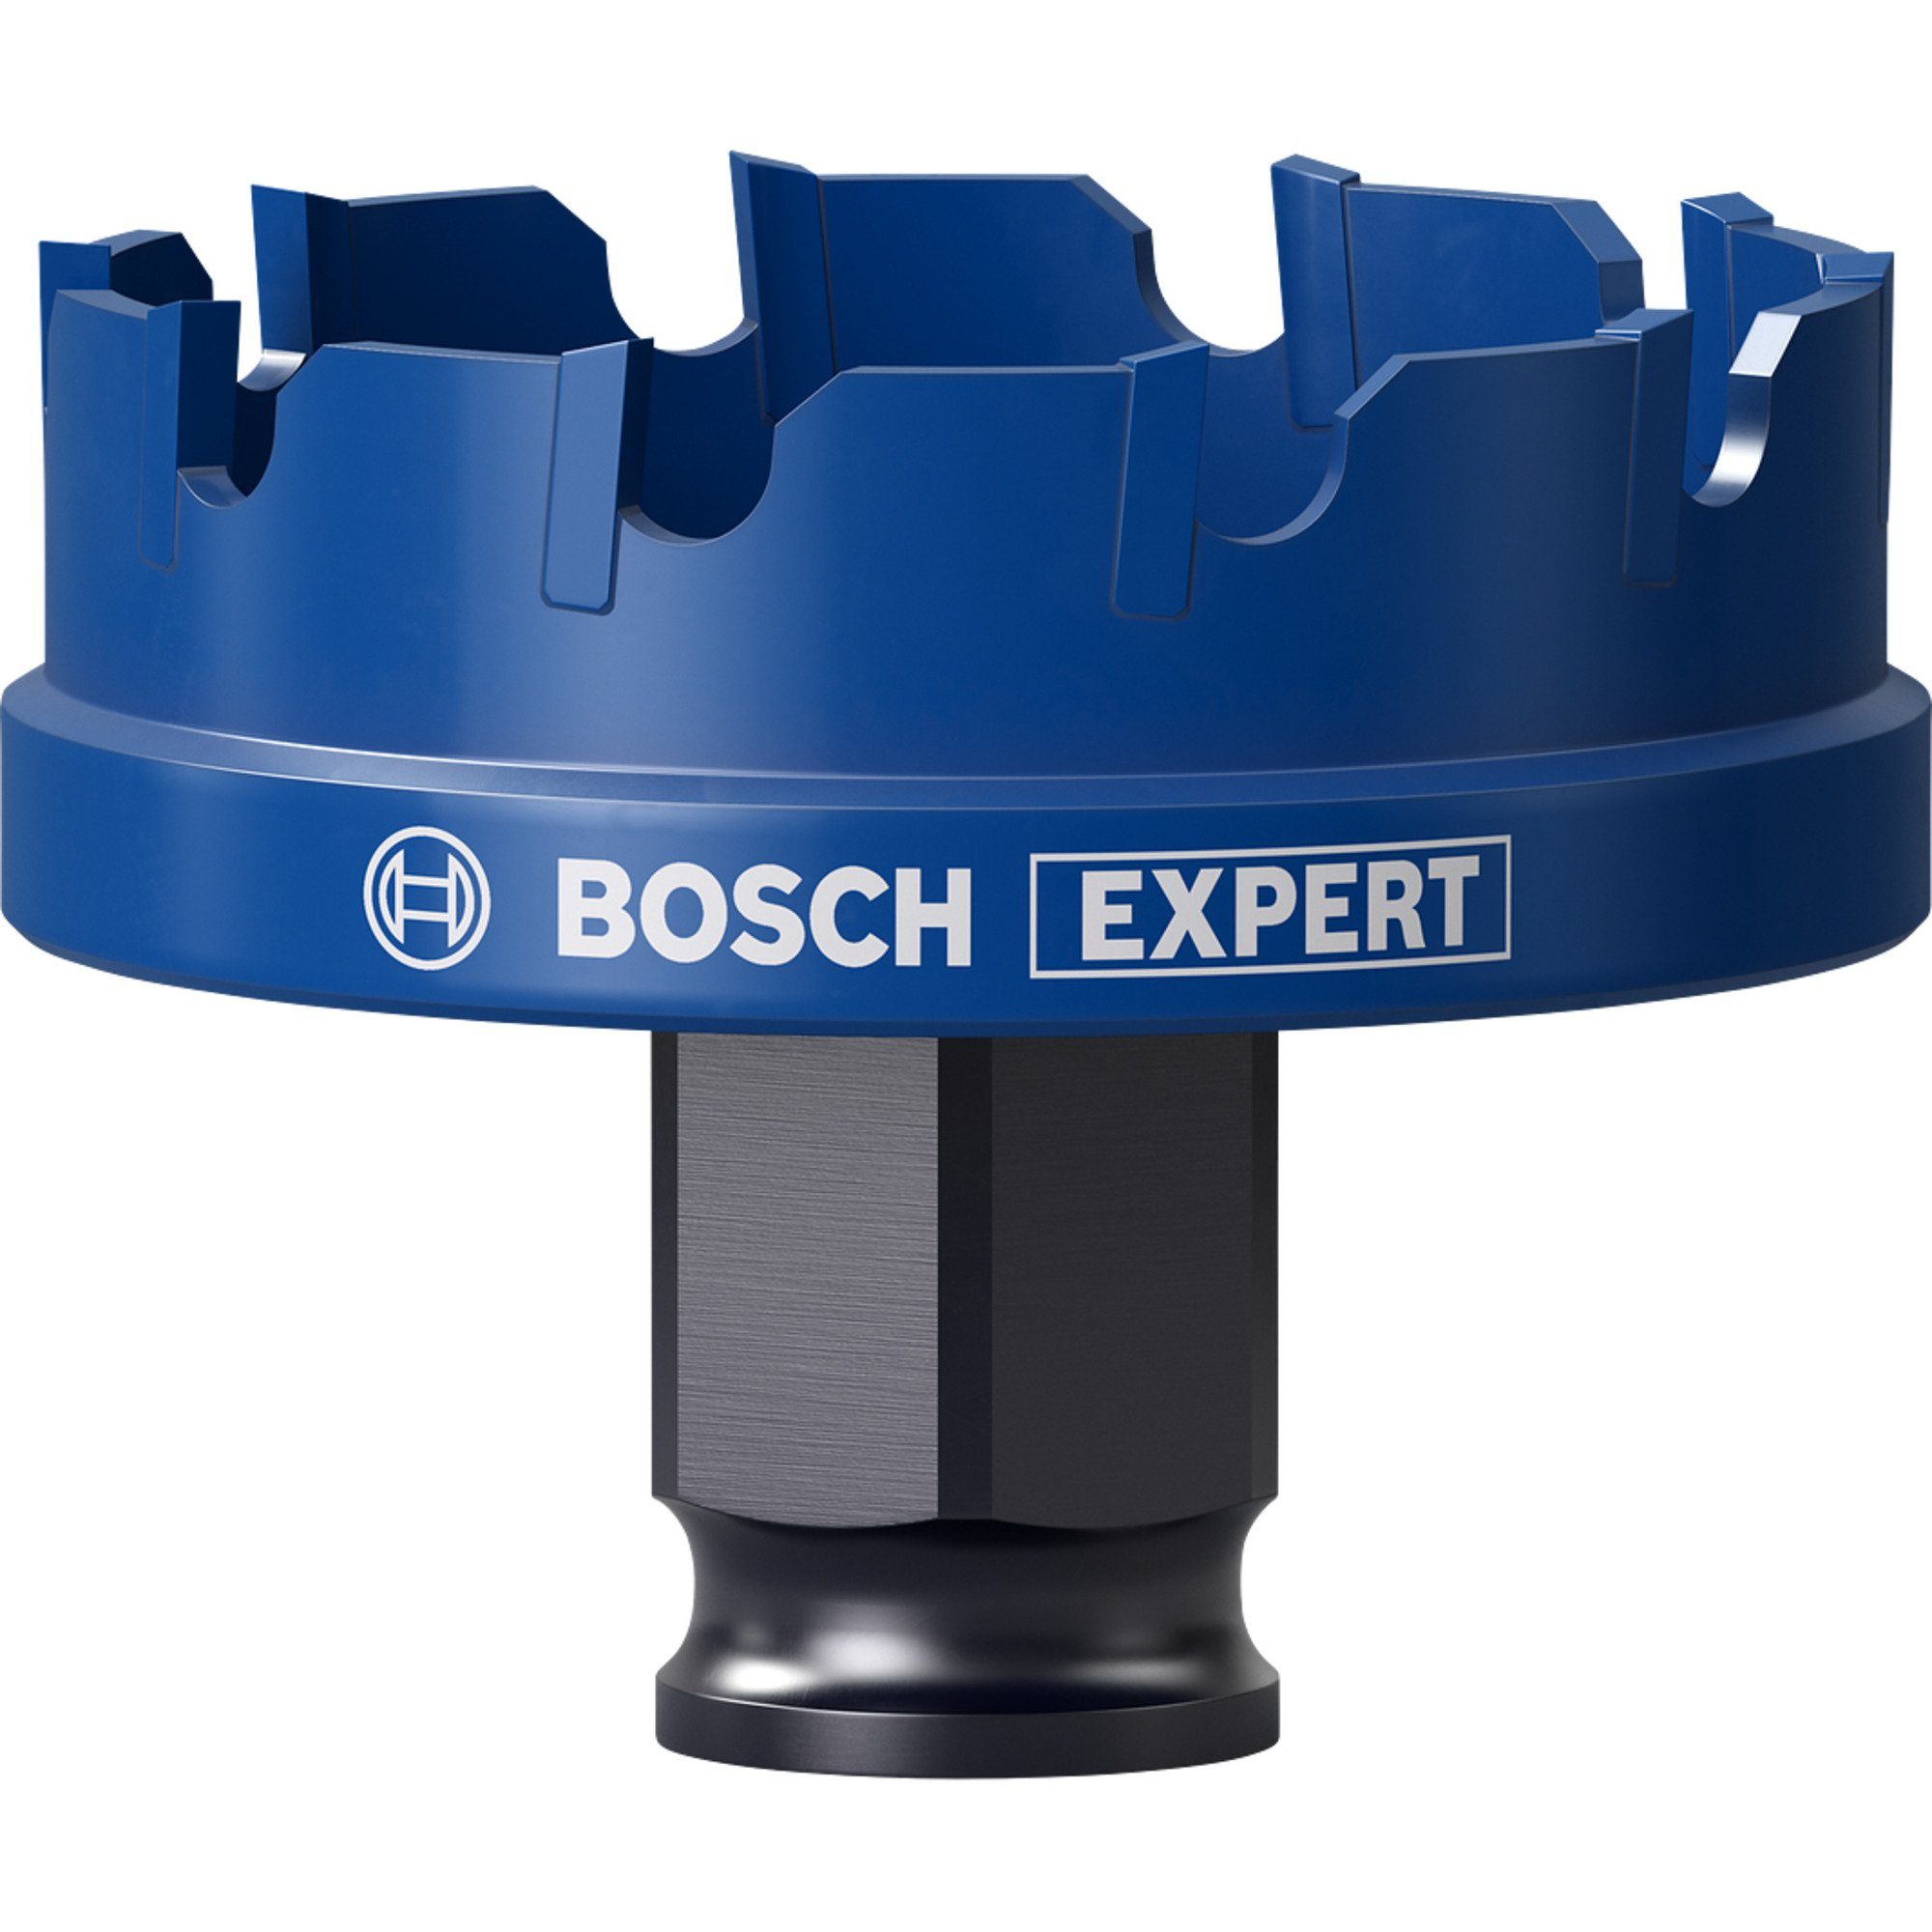 Bosch BOSCH Professional Expert Lochsäge Sägeblatt Carbide